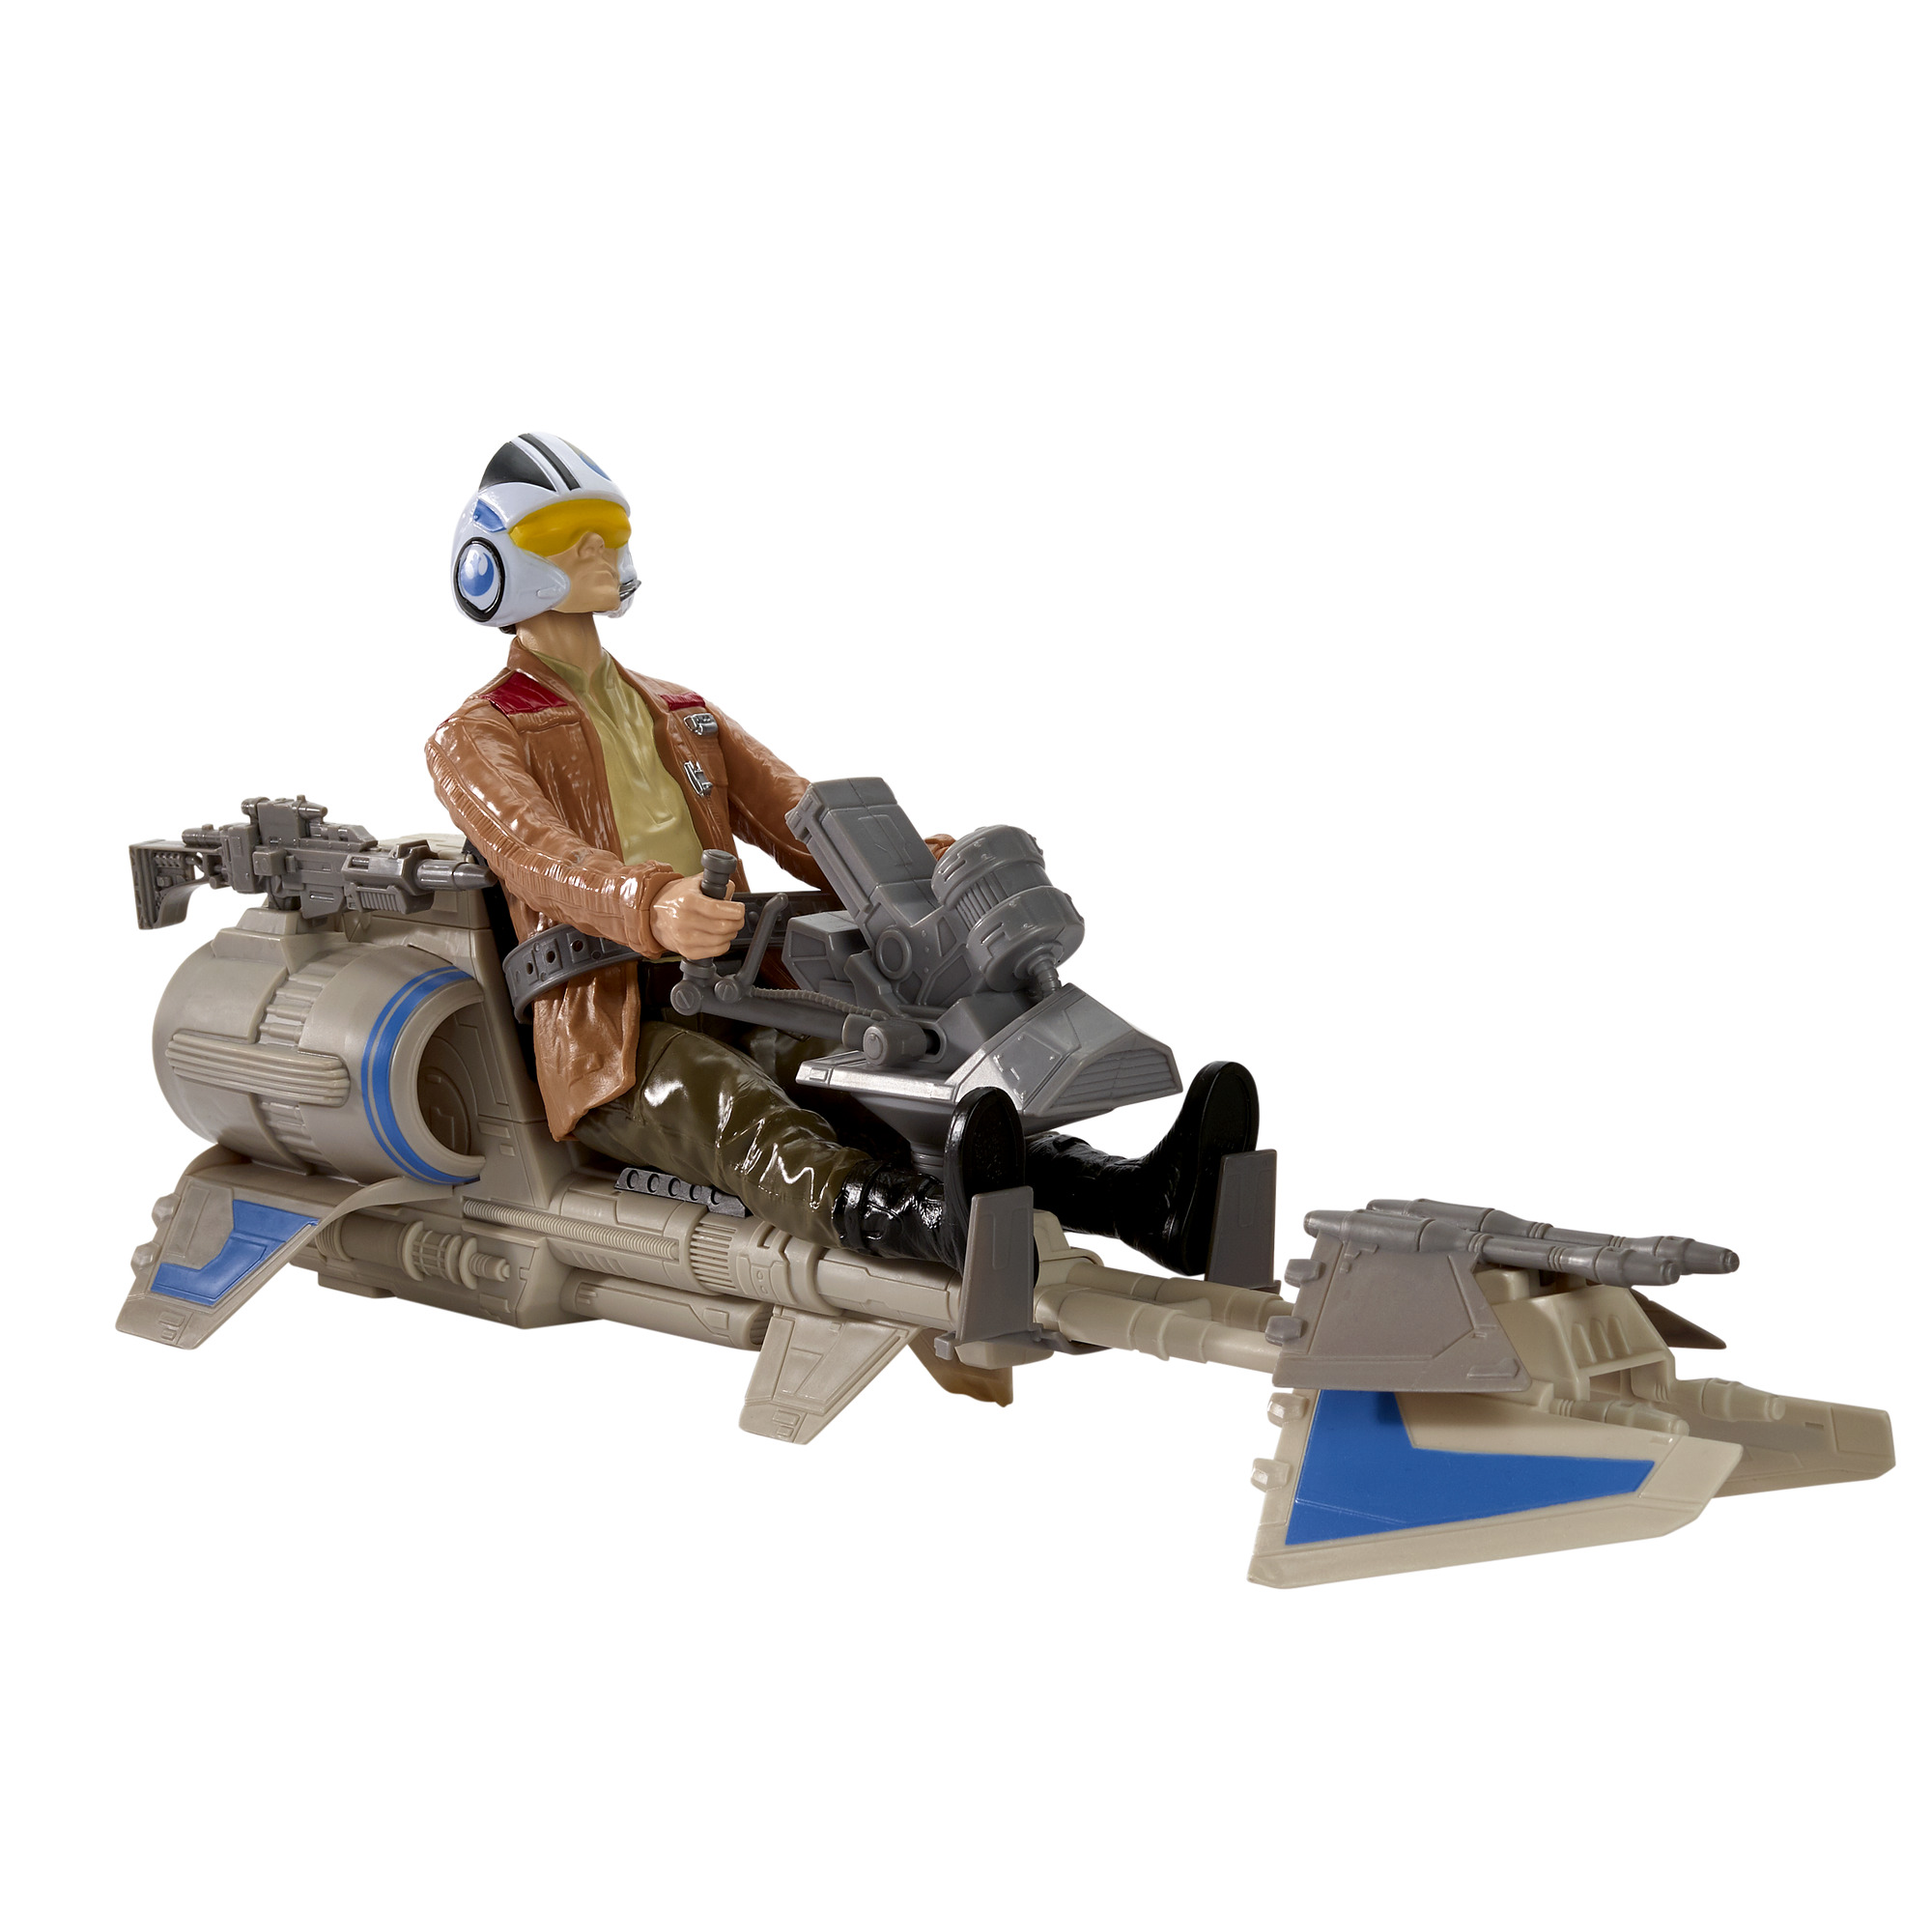 Star Wars Speeder Bike With Poe Dameron - image 1 of 8